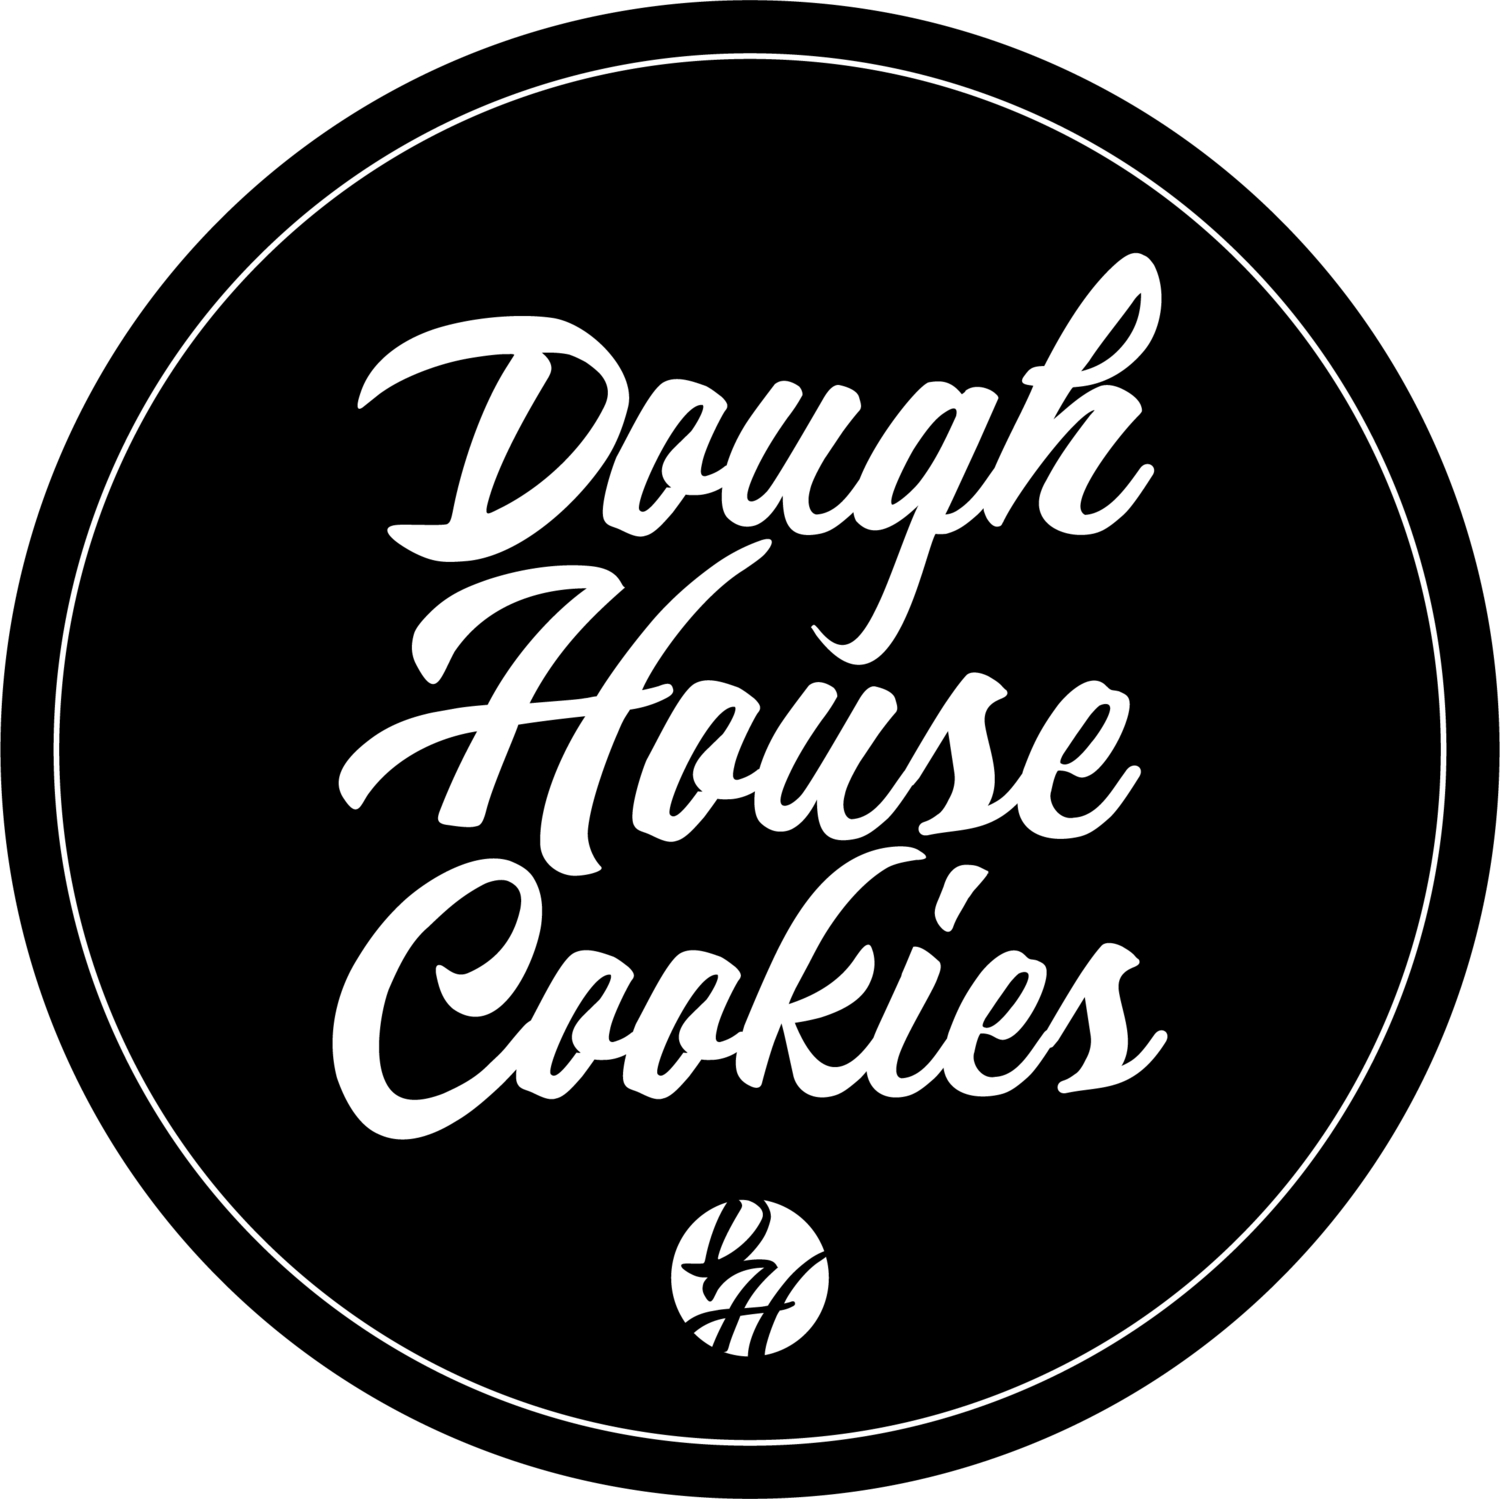 Dough House Cookies